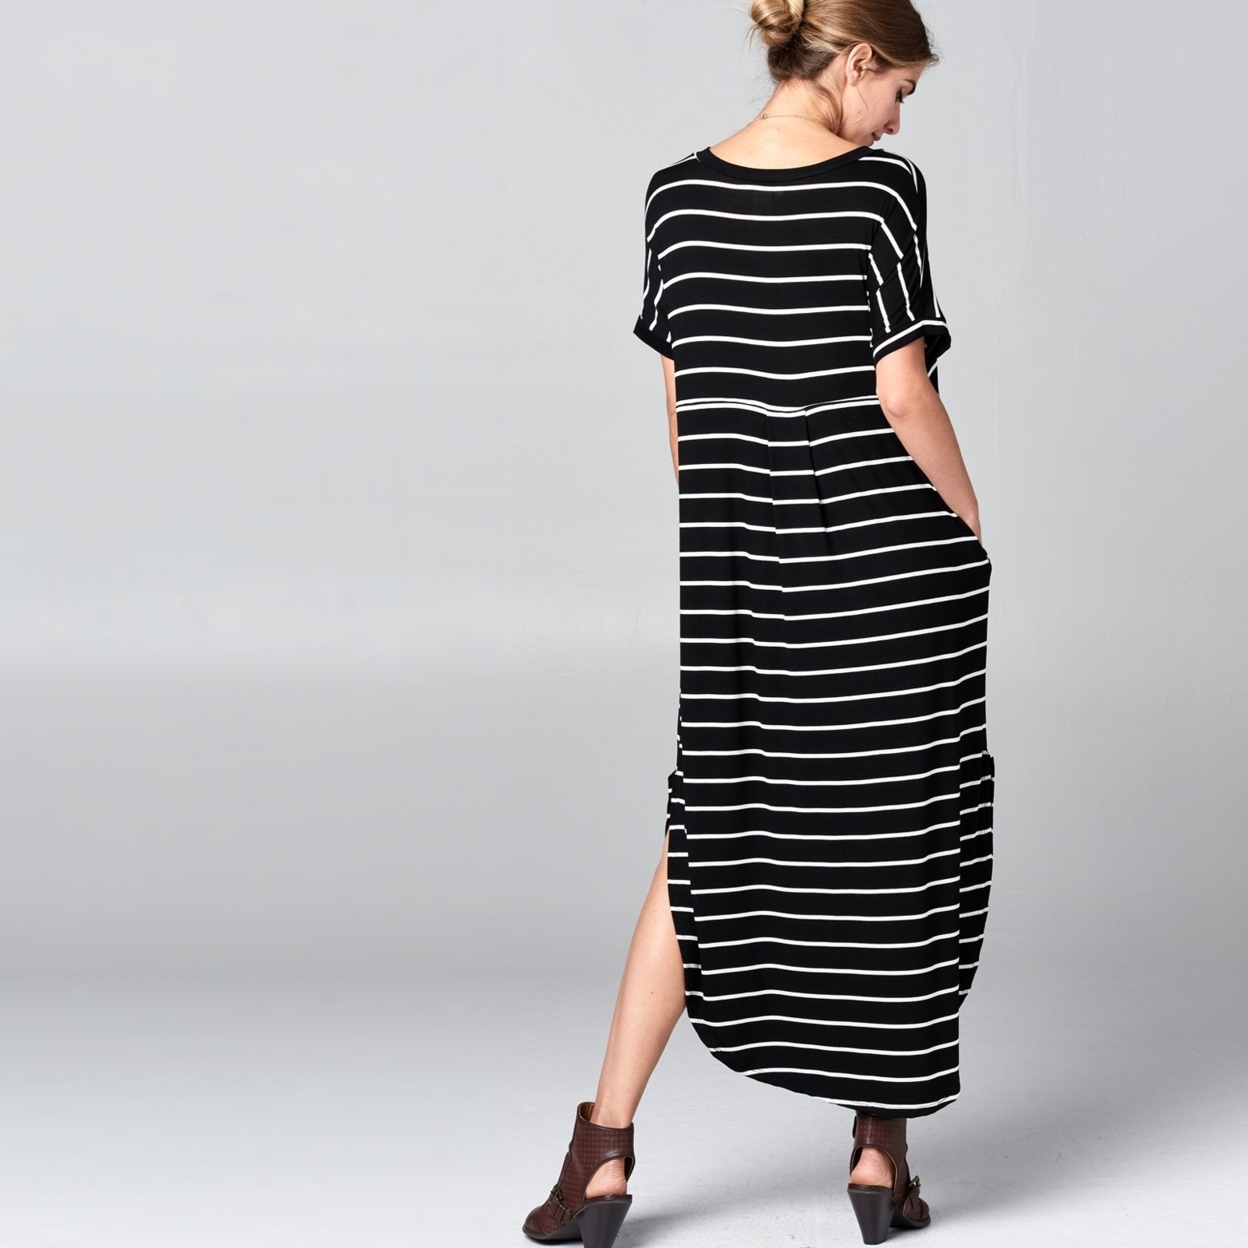 RL Black White Striped Maxi Dress - Black/white, Small (2-8)